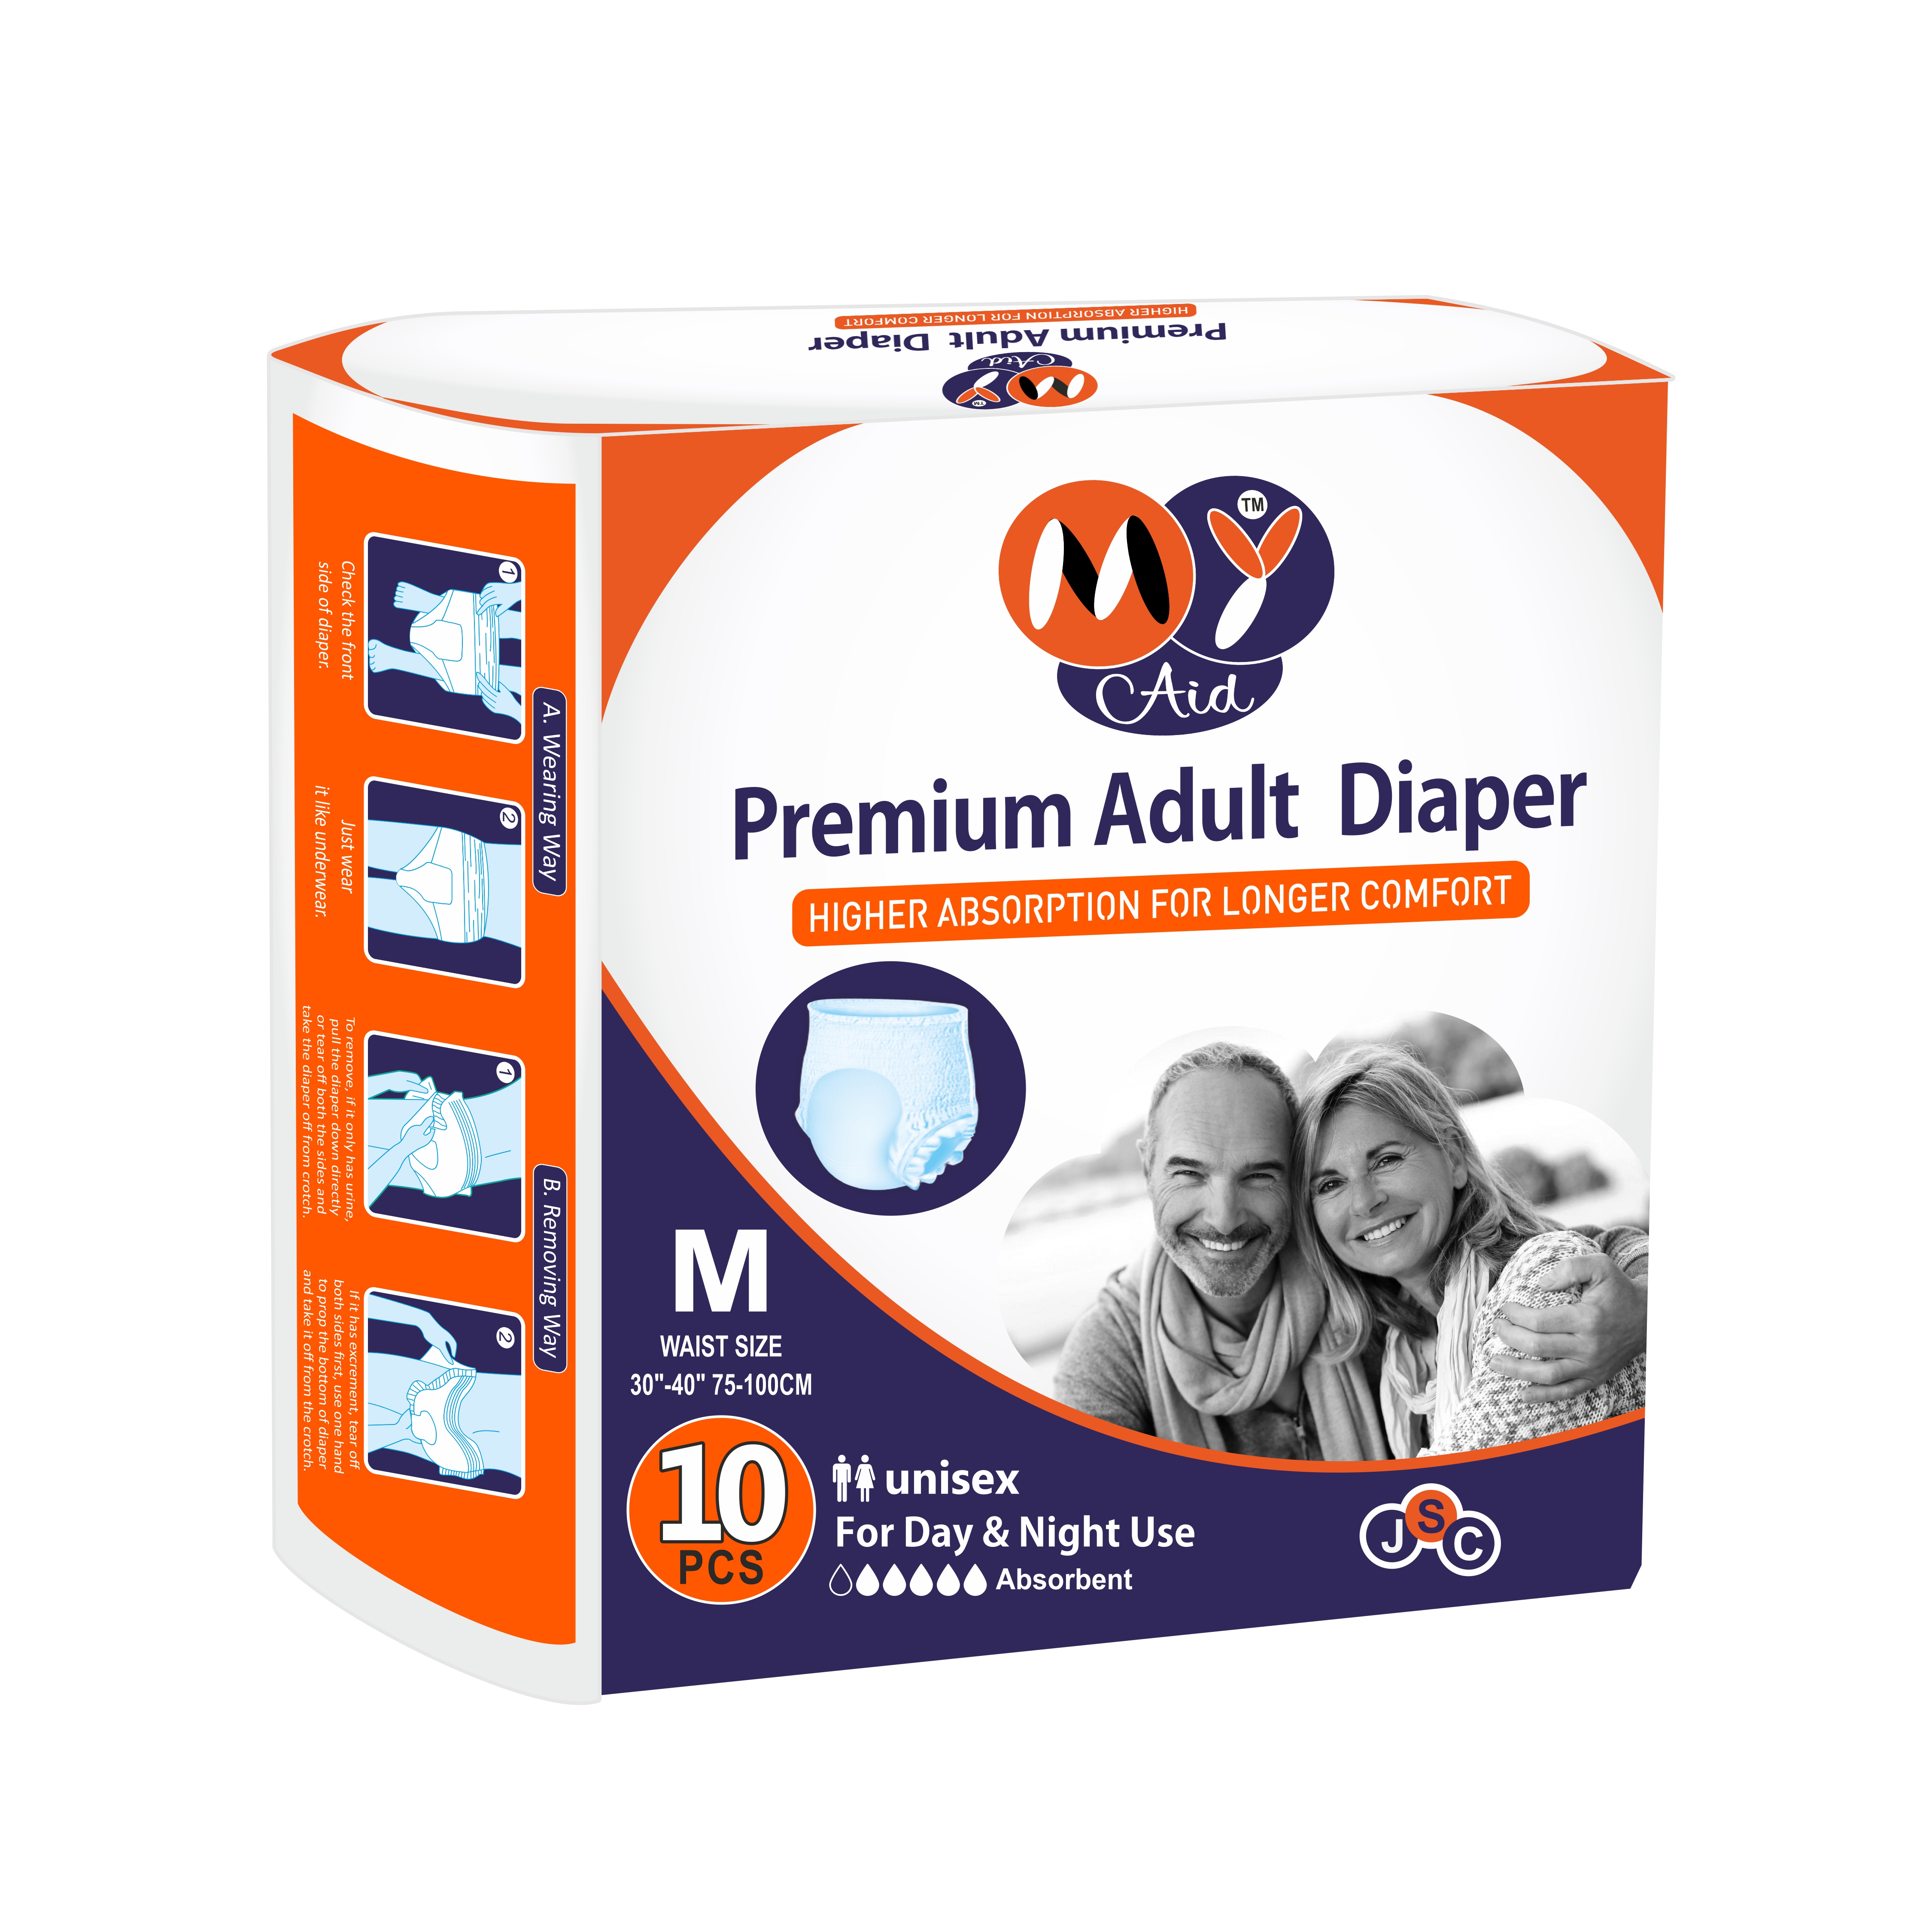 MyAid Premium Adult Diaper M 10s Packs_ Waist Size 30″- 40″  75-100cm